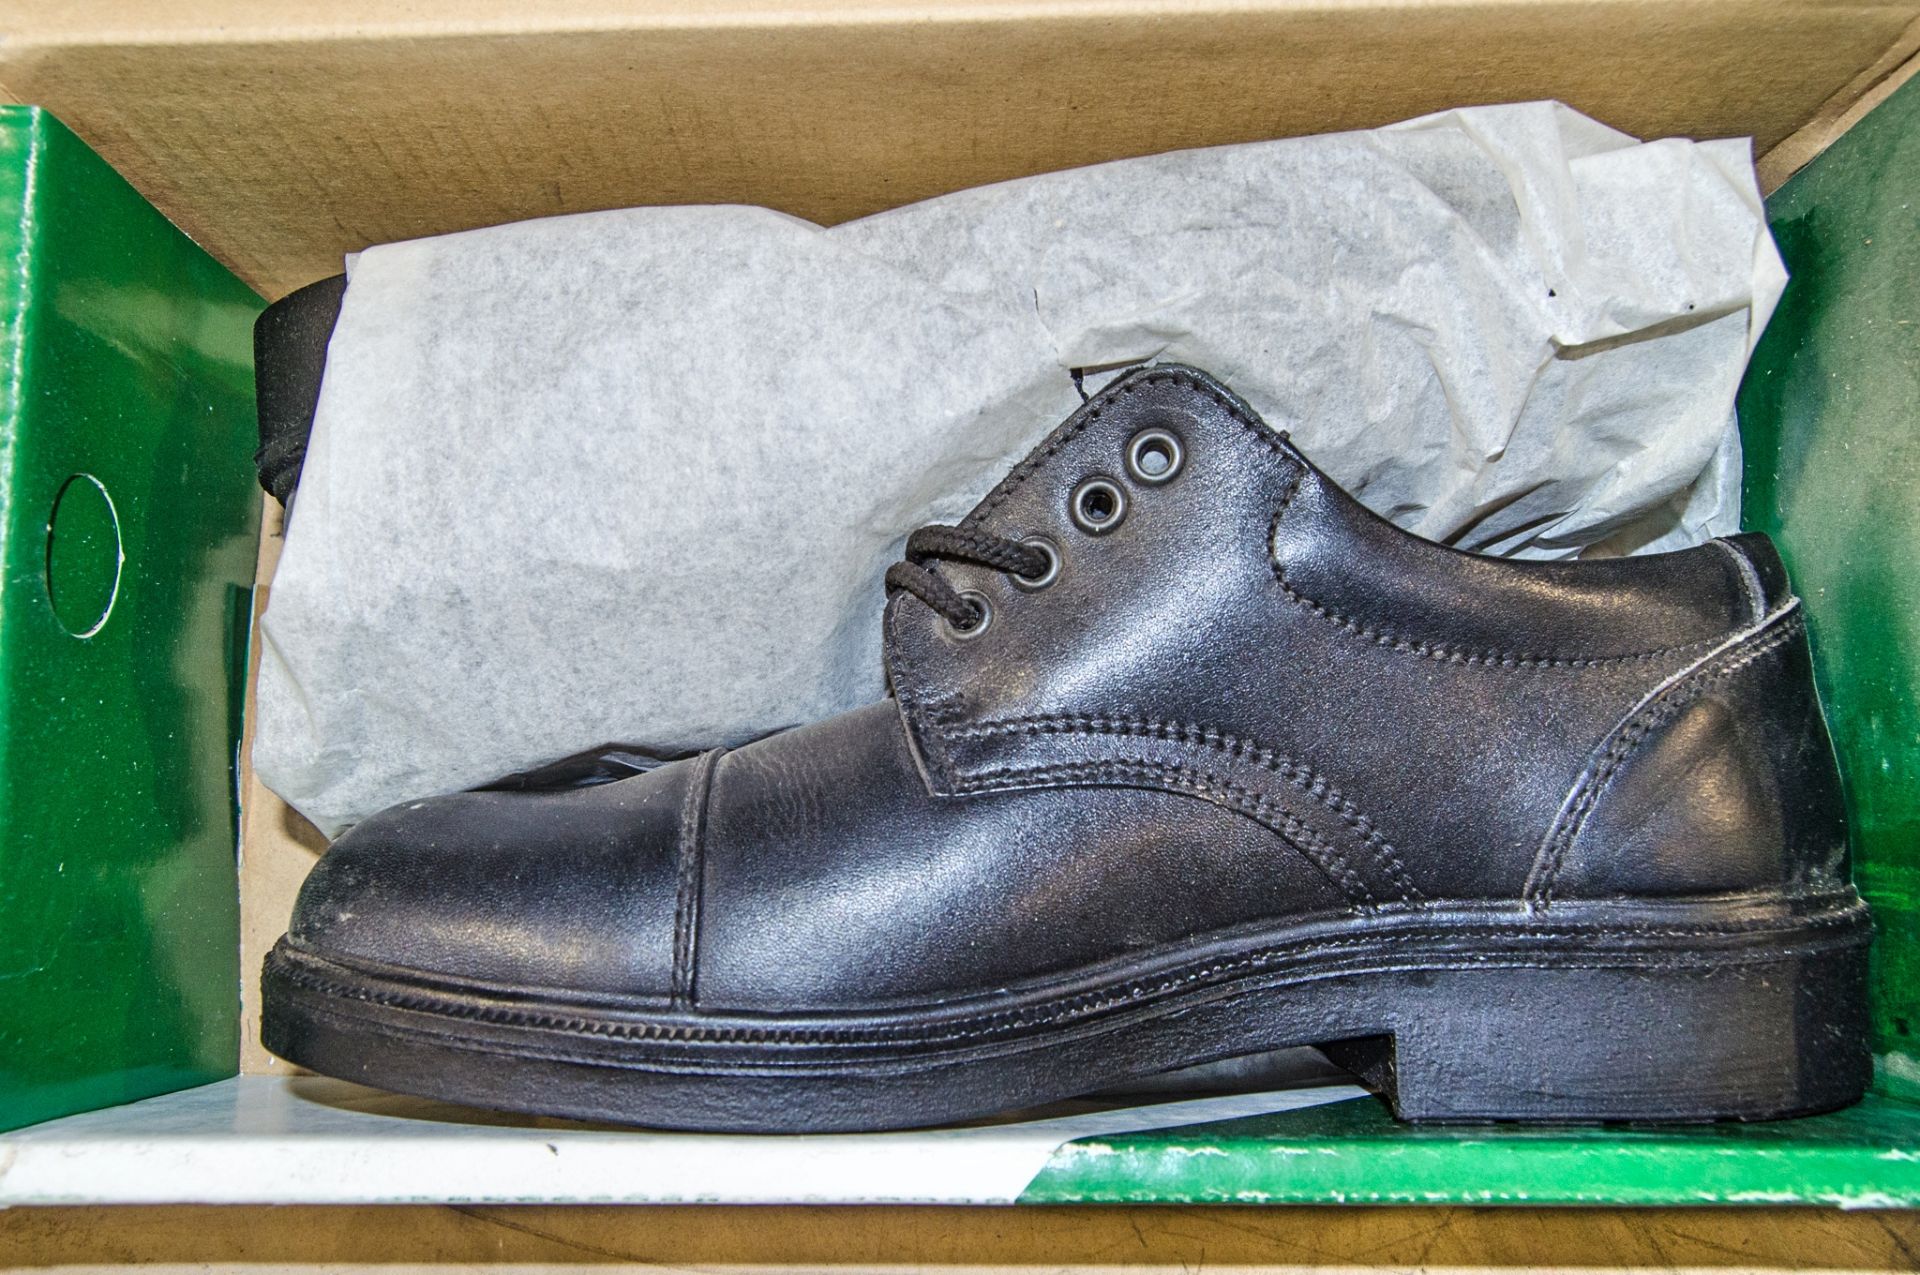 Pair of size 8 Bala steel toe cap work shoes